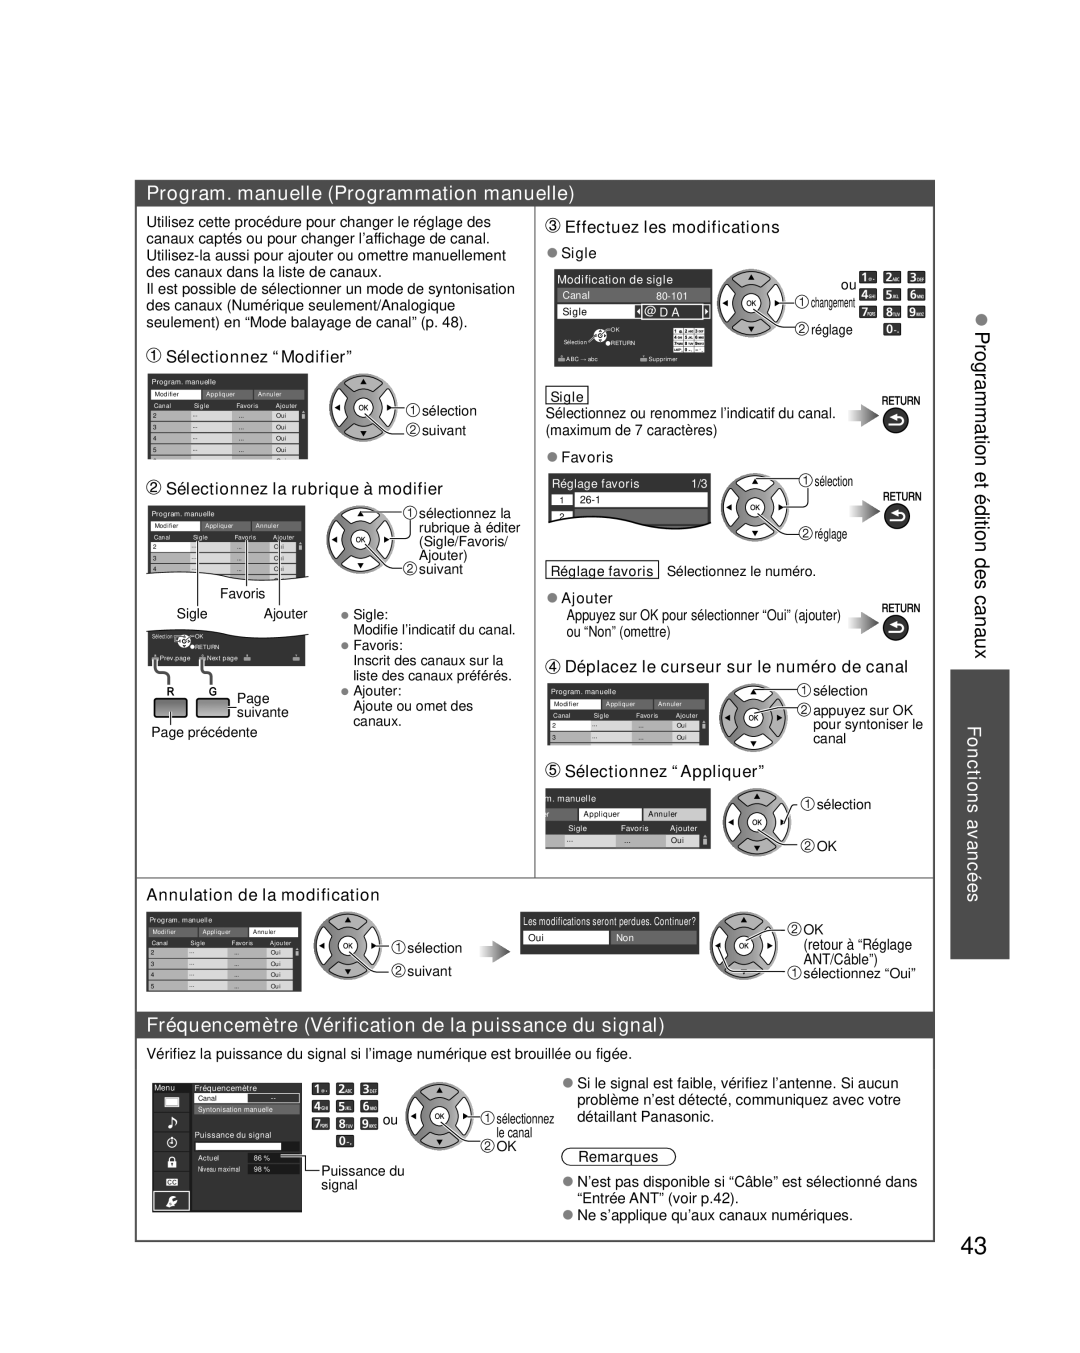 Panasonic TC-L42E30 Program. manuelle Programmation manuelle, Programmation et, édition des canaux Fonctions avancées 